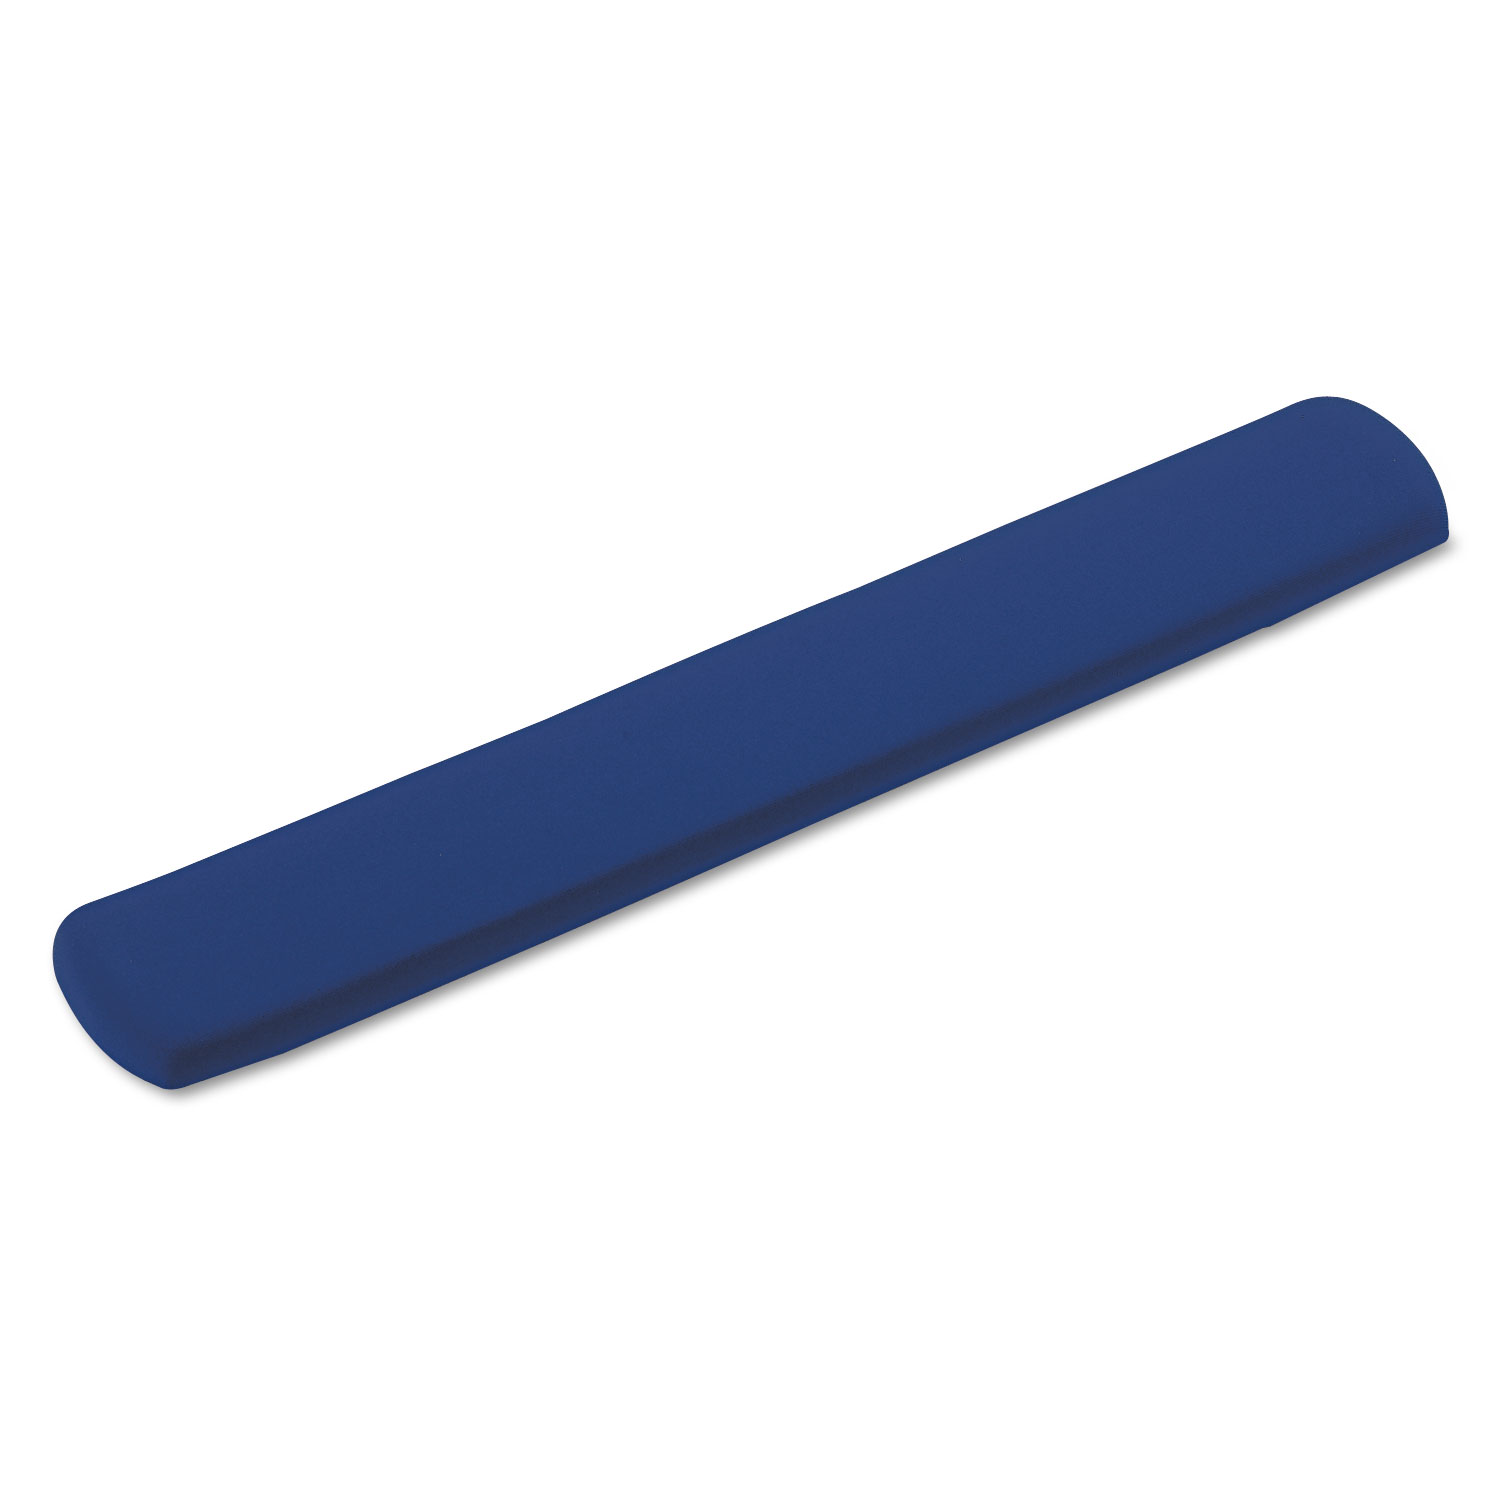  Innovera IVR50457 Gel Nonskid Keyboard Wrist Rest, Blue (IVR50457) 